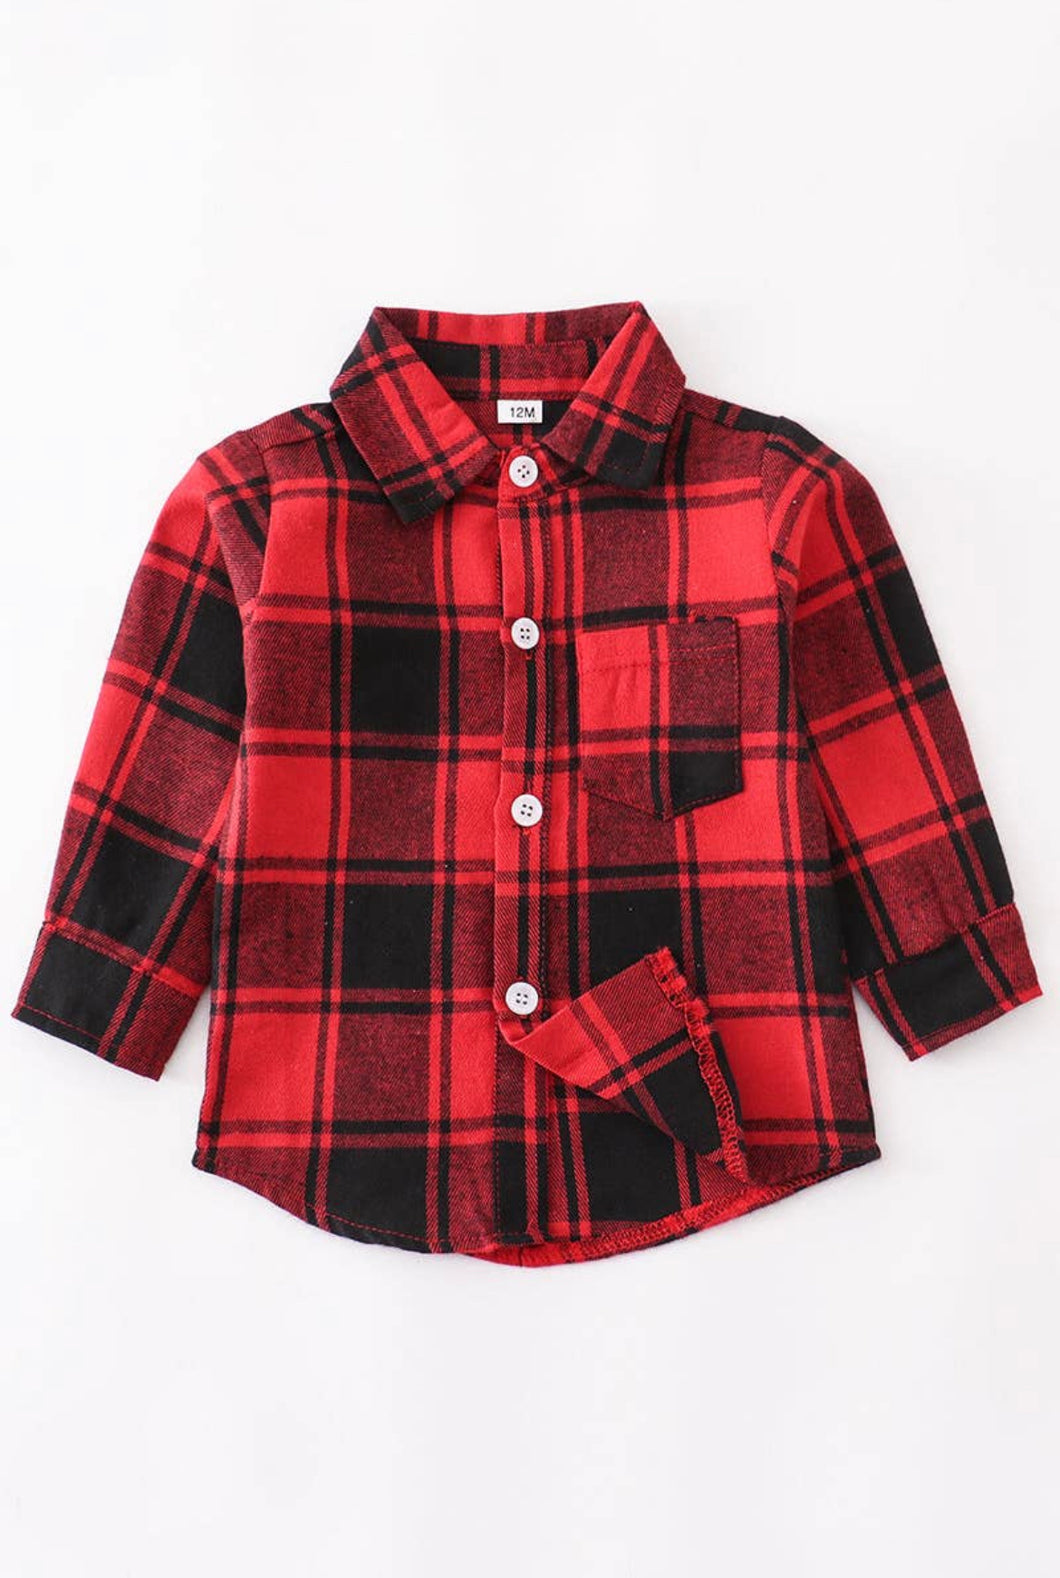 Boy's Black Red Plaid Button Down Shirt